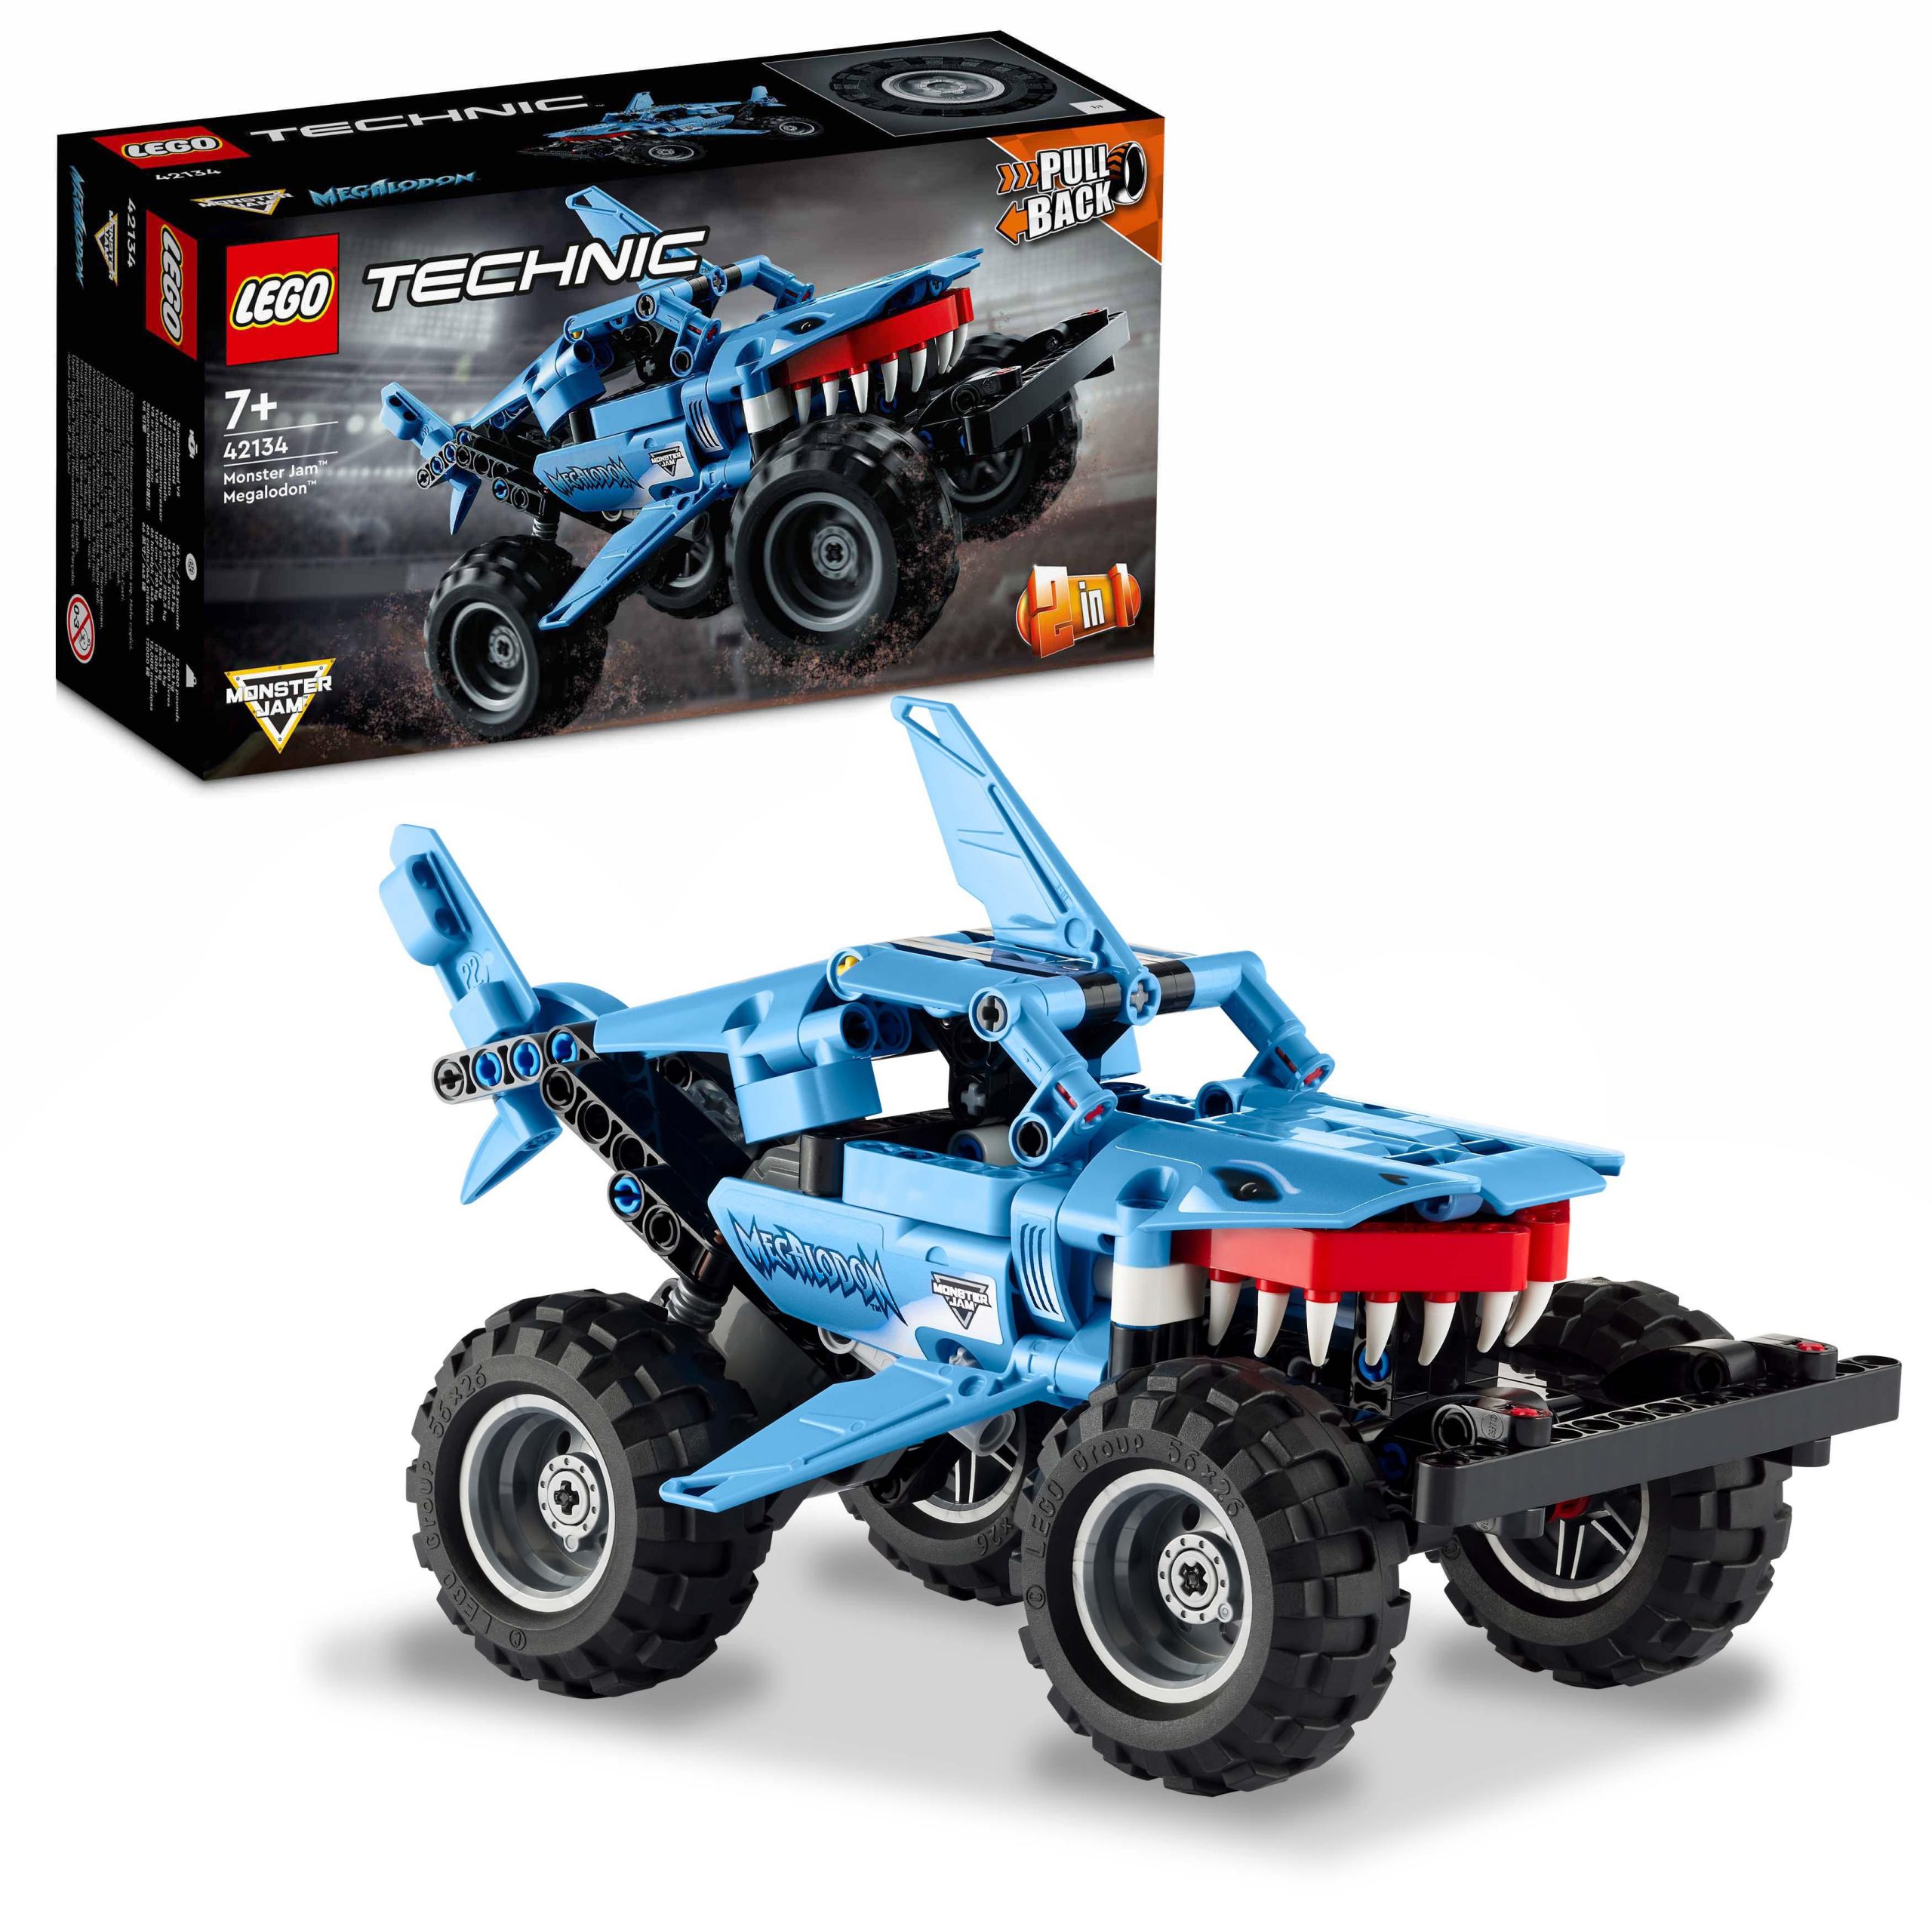 Lego technic monster jam megalodon, da camion a macchina giocattolo low  racer lusca, per bambini di 7+ anni, 42134 - Toys Center